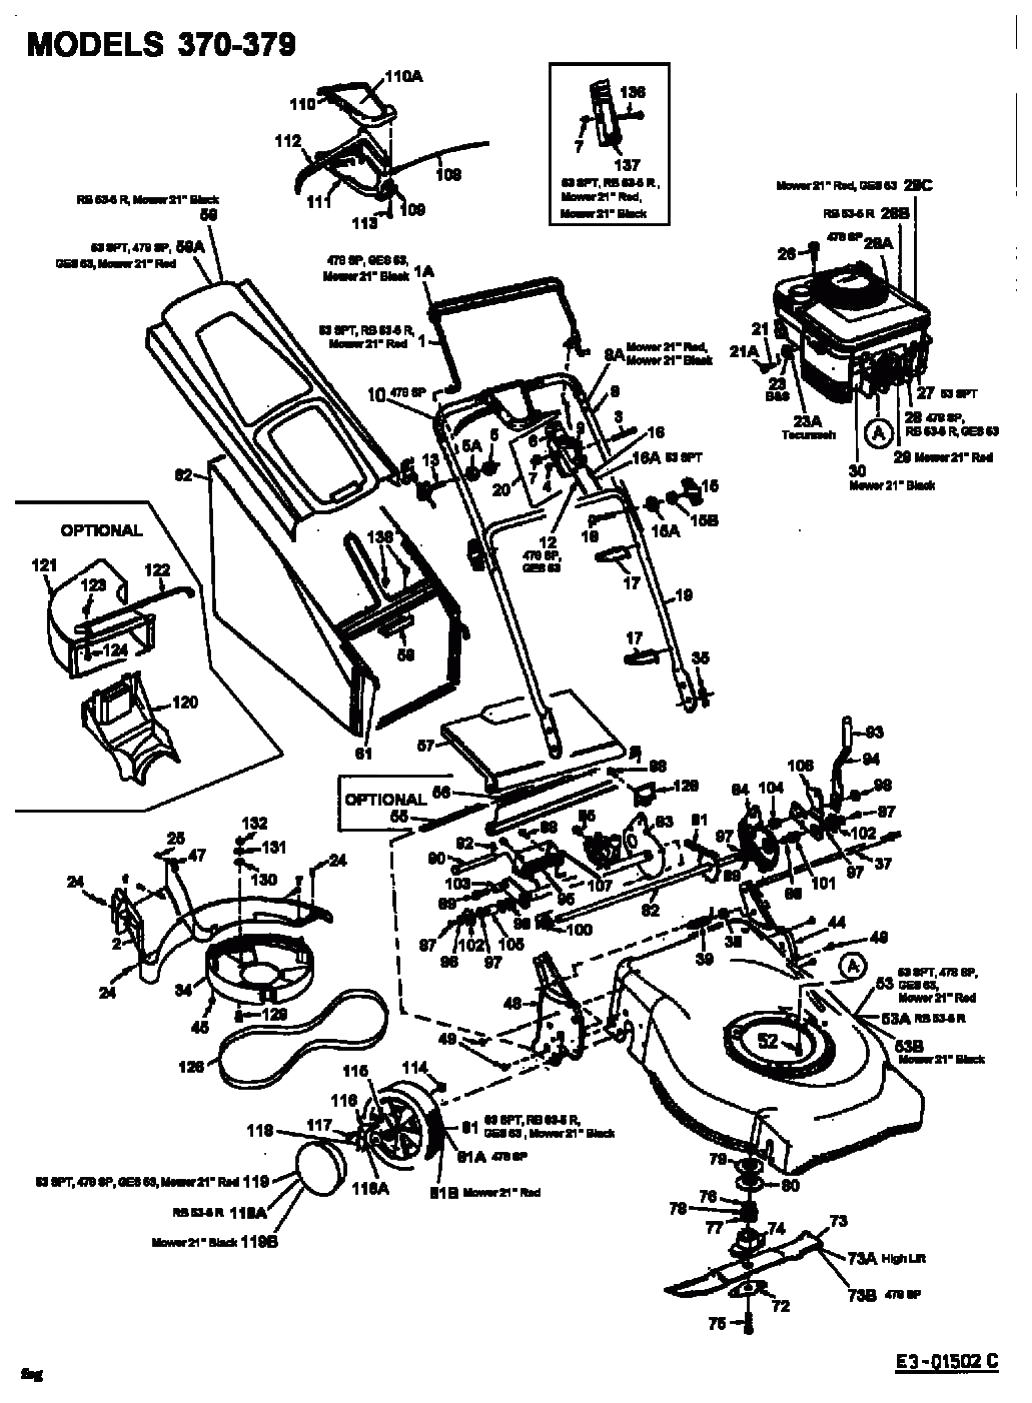 MTD Артикул 12A-373N600 (год выпуска 2002). Основная деталировка